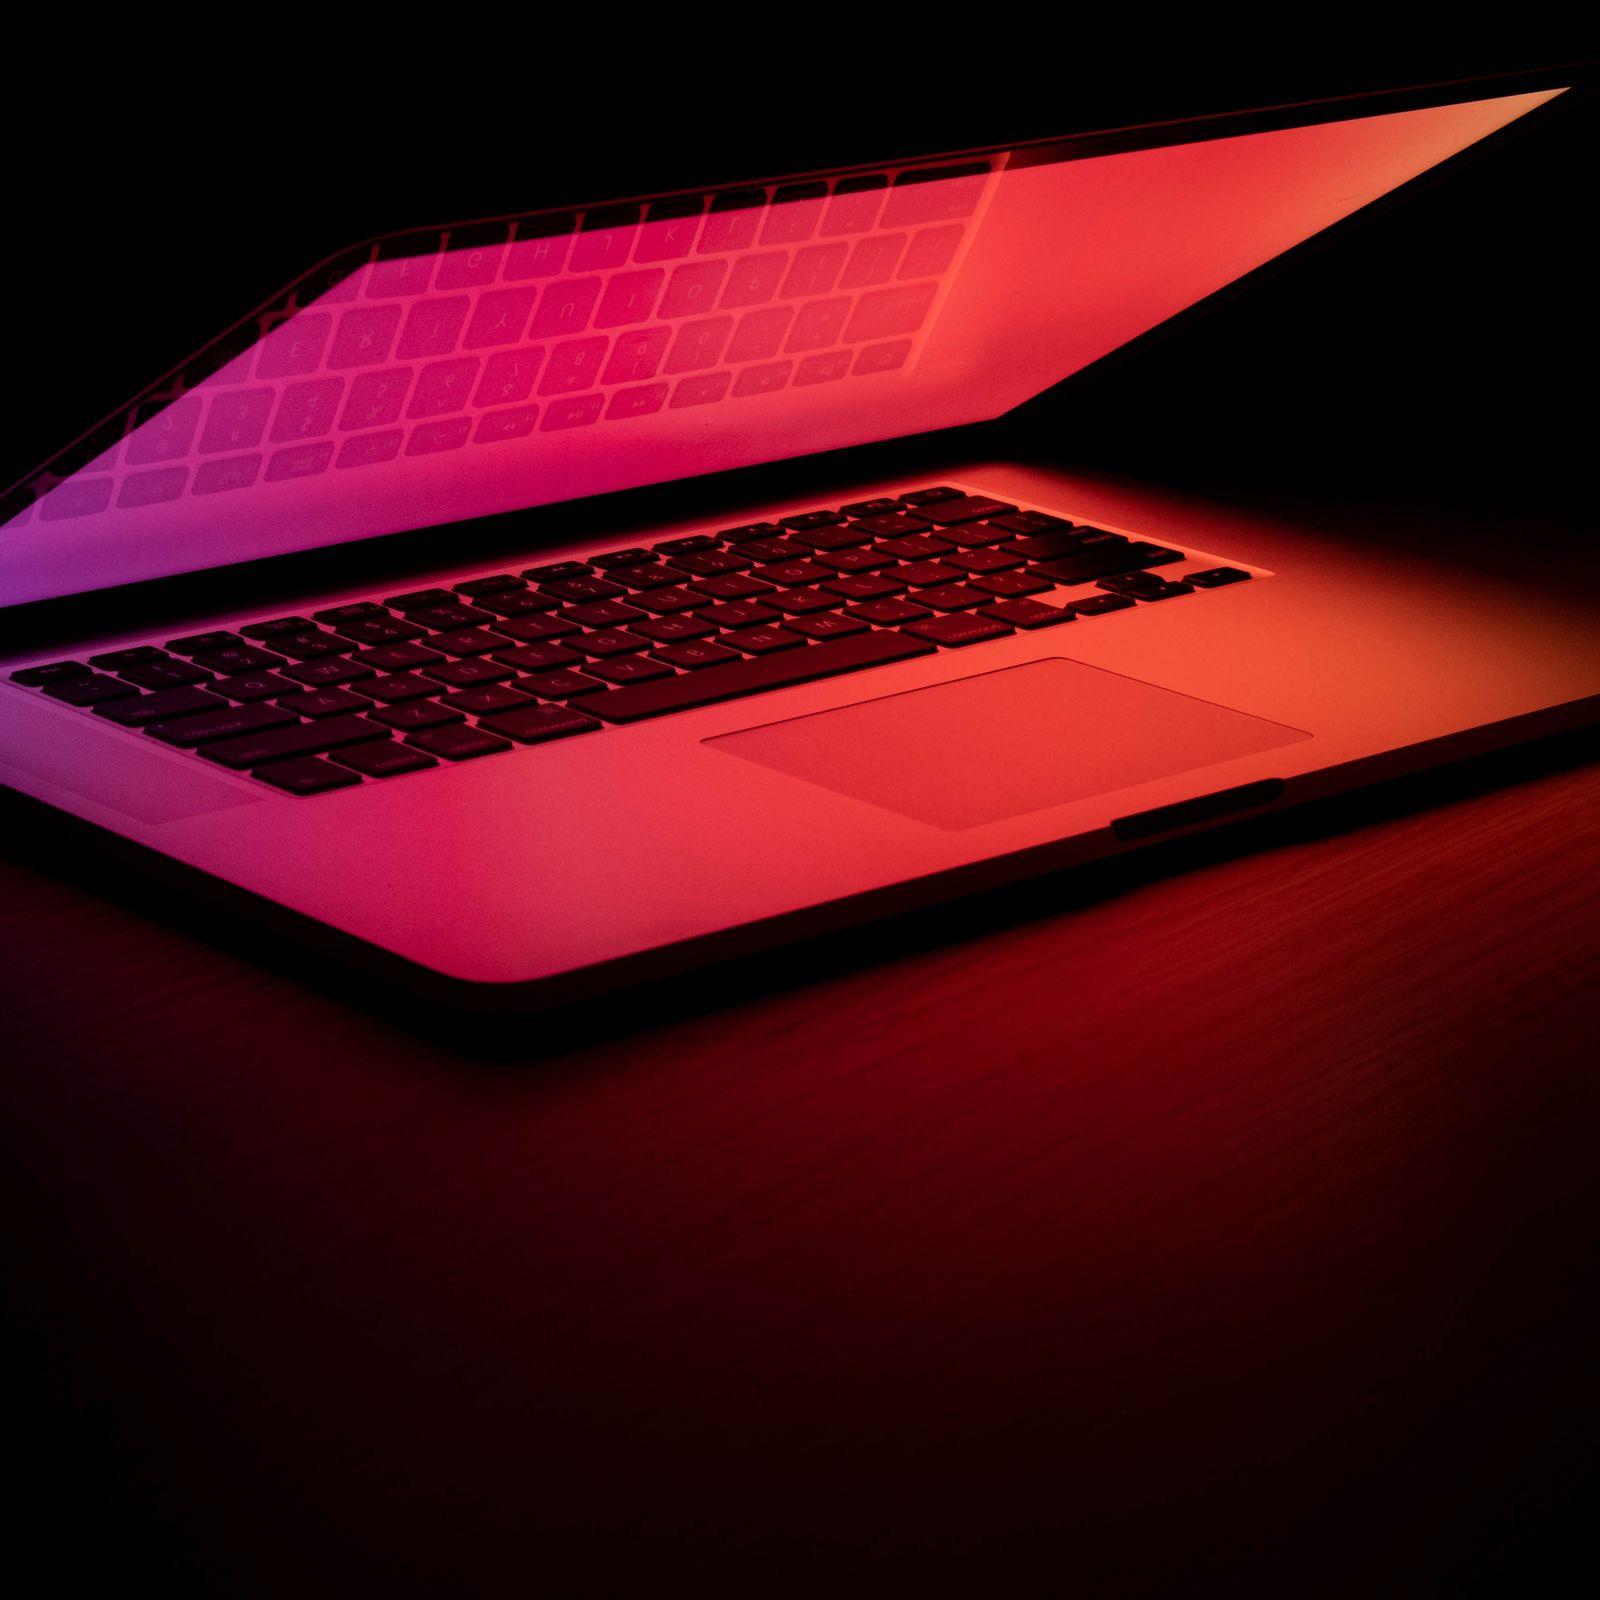 Dark room with Laptop glow